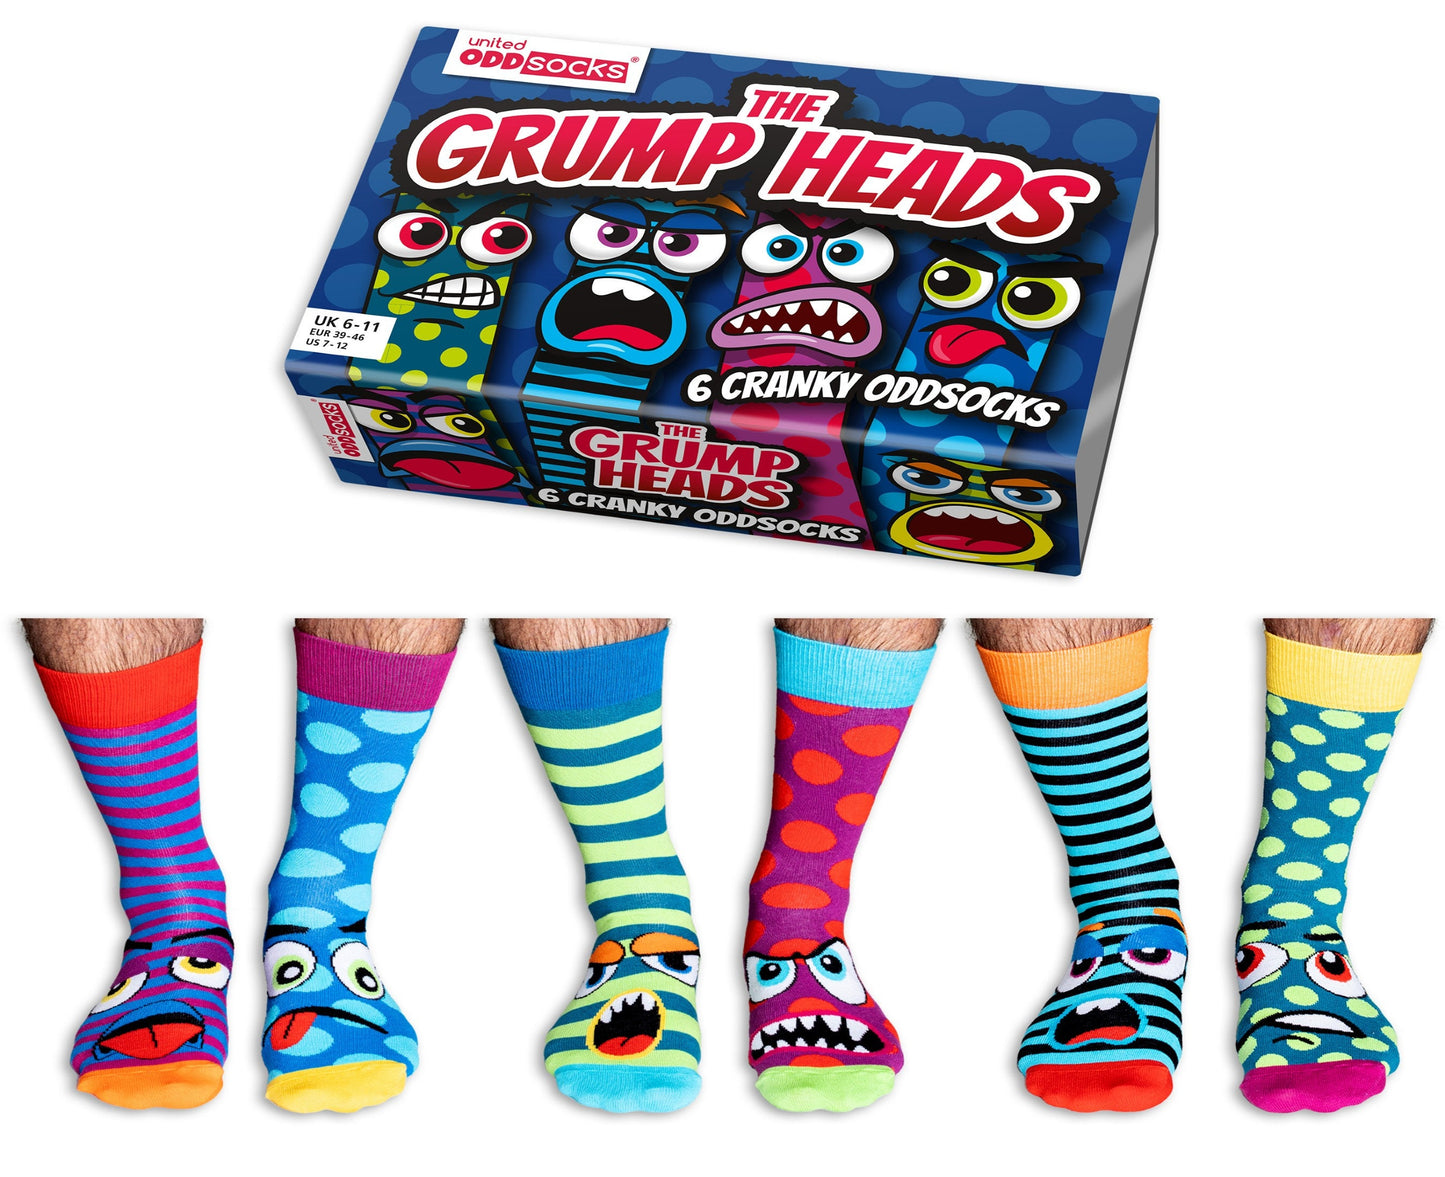 United Oddsocks Grump Heads 6 Odd Socks Gift Box - Mens Size 6-11